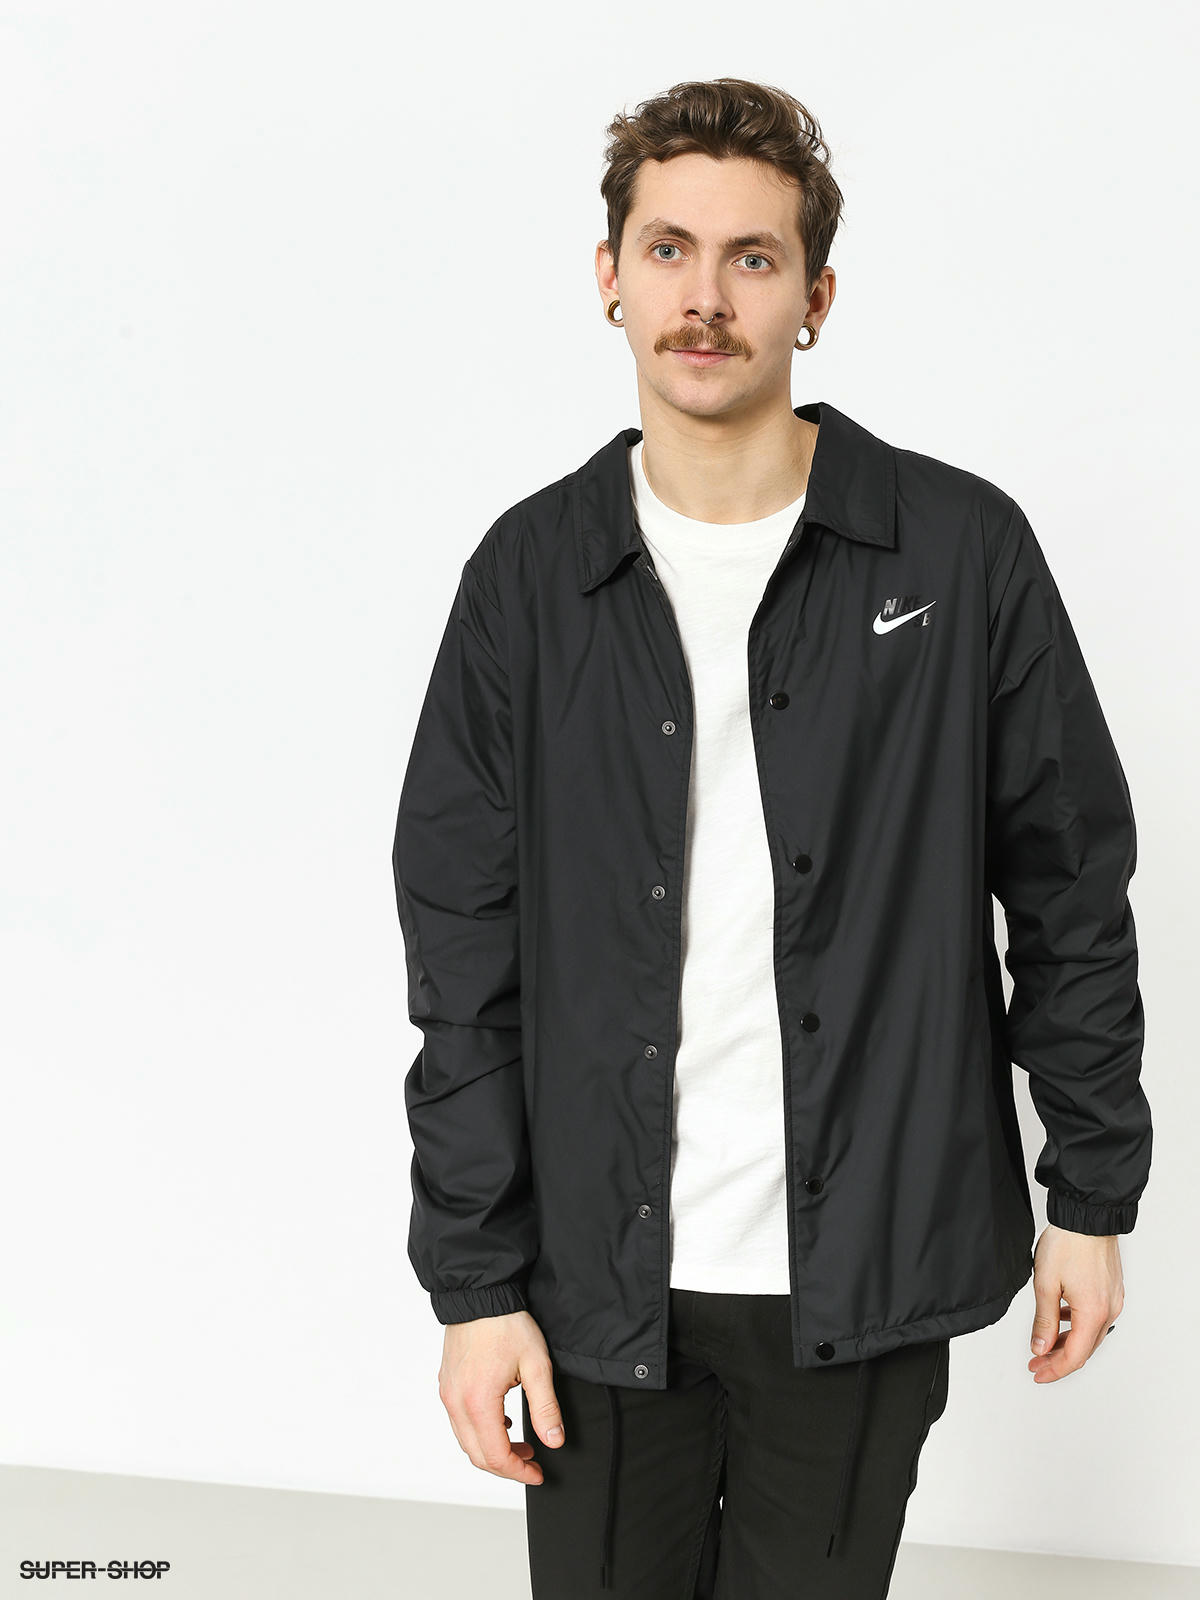 niets Impasse Onregelmatigheden Nike SB Sb Shield Jacket (black/white)